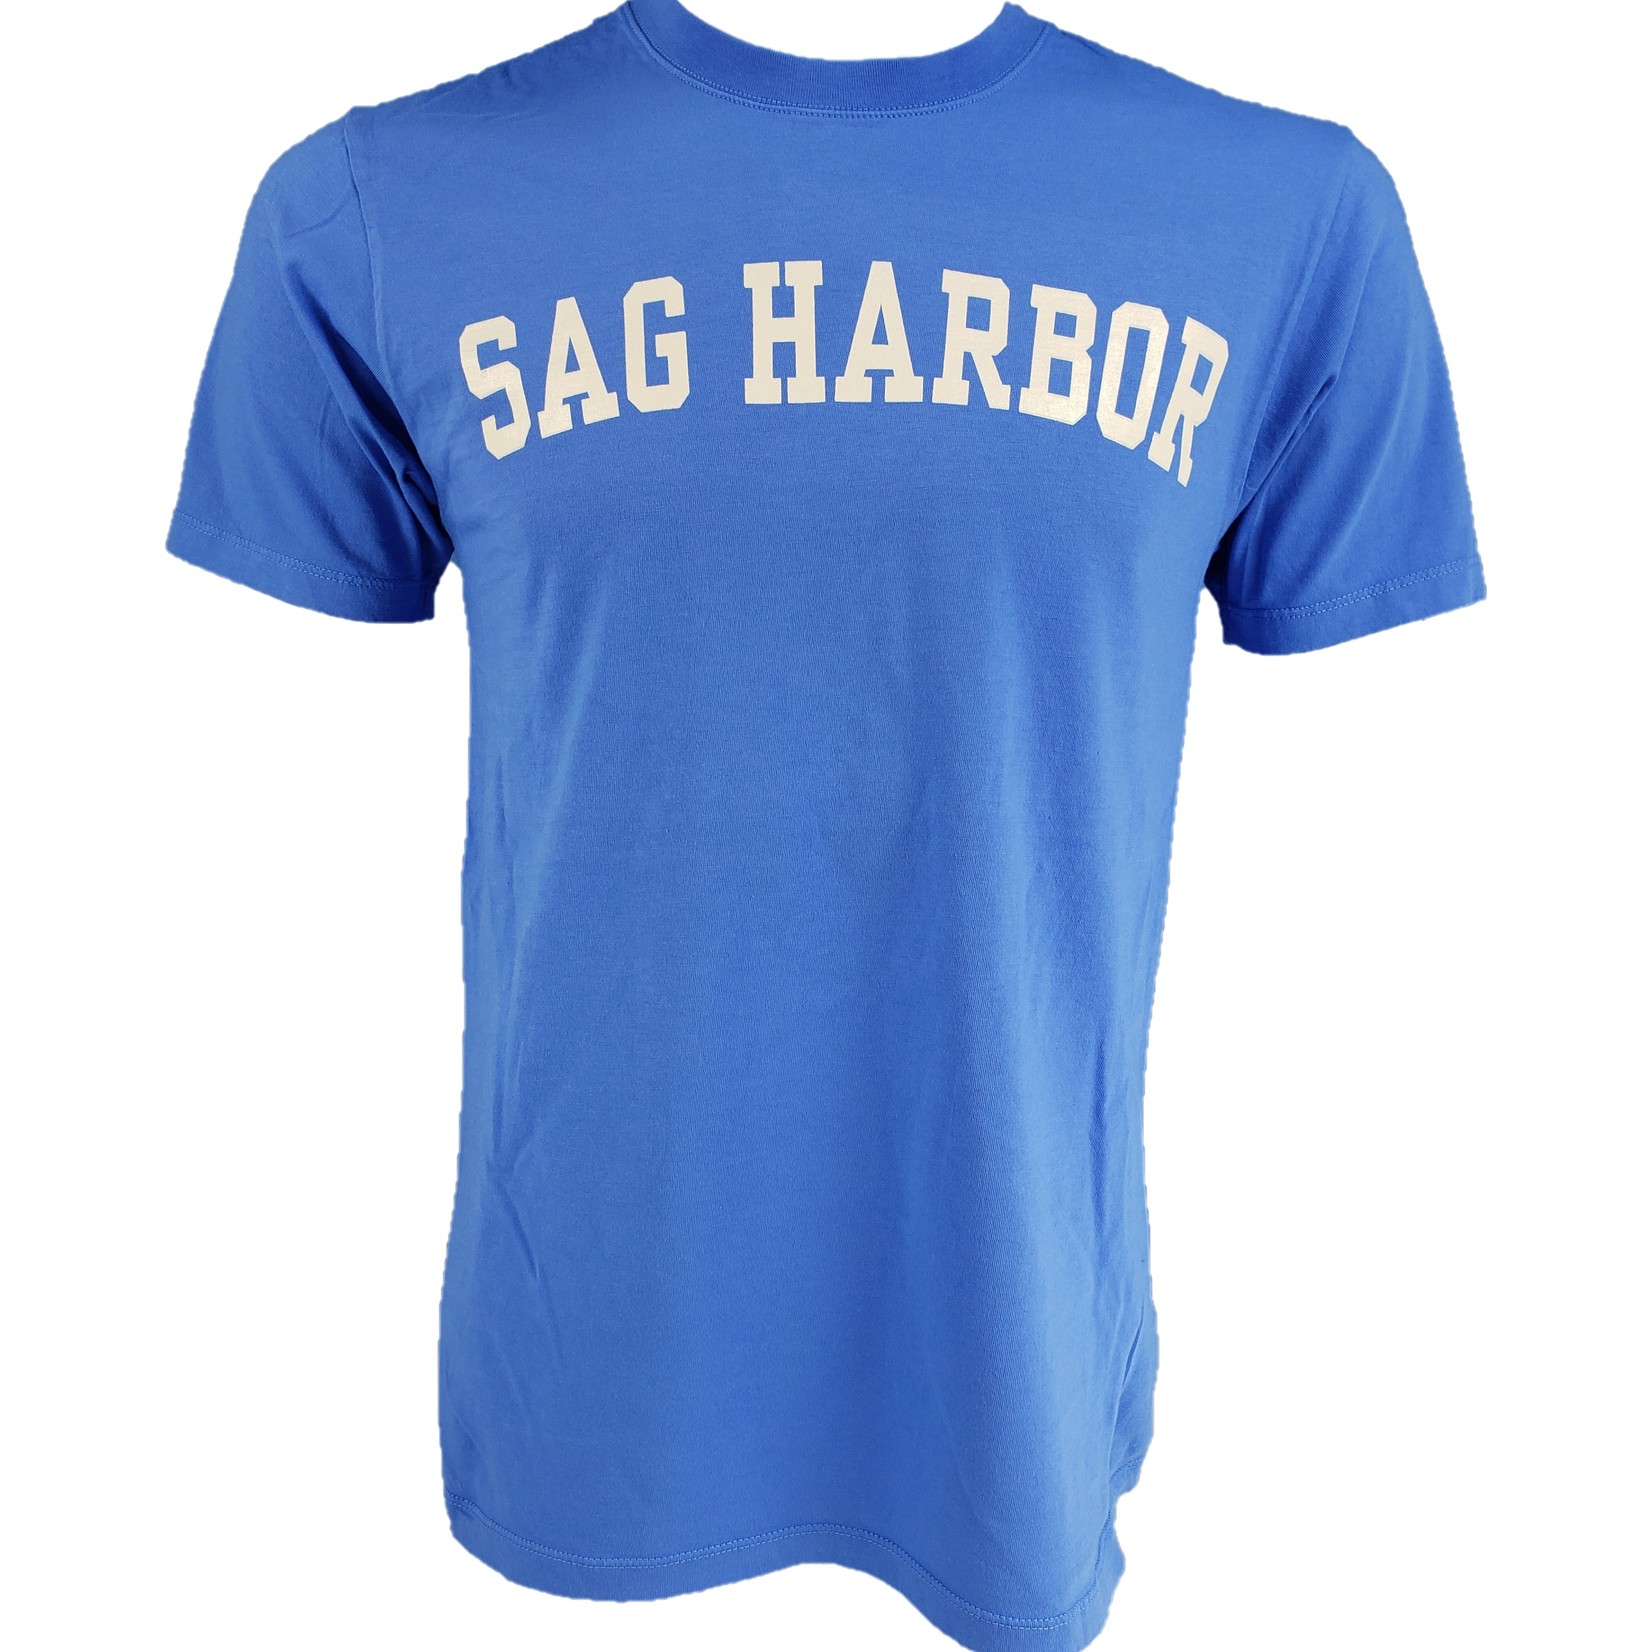 Sag Harbor Sag Harbor Soft Tee